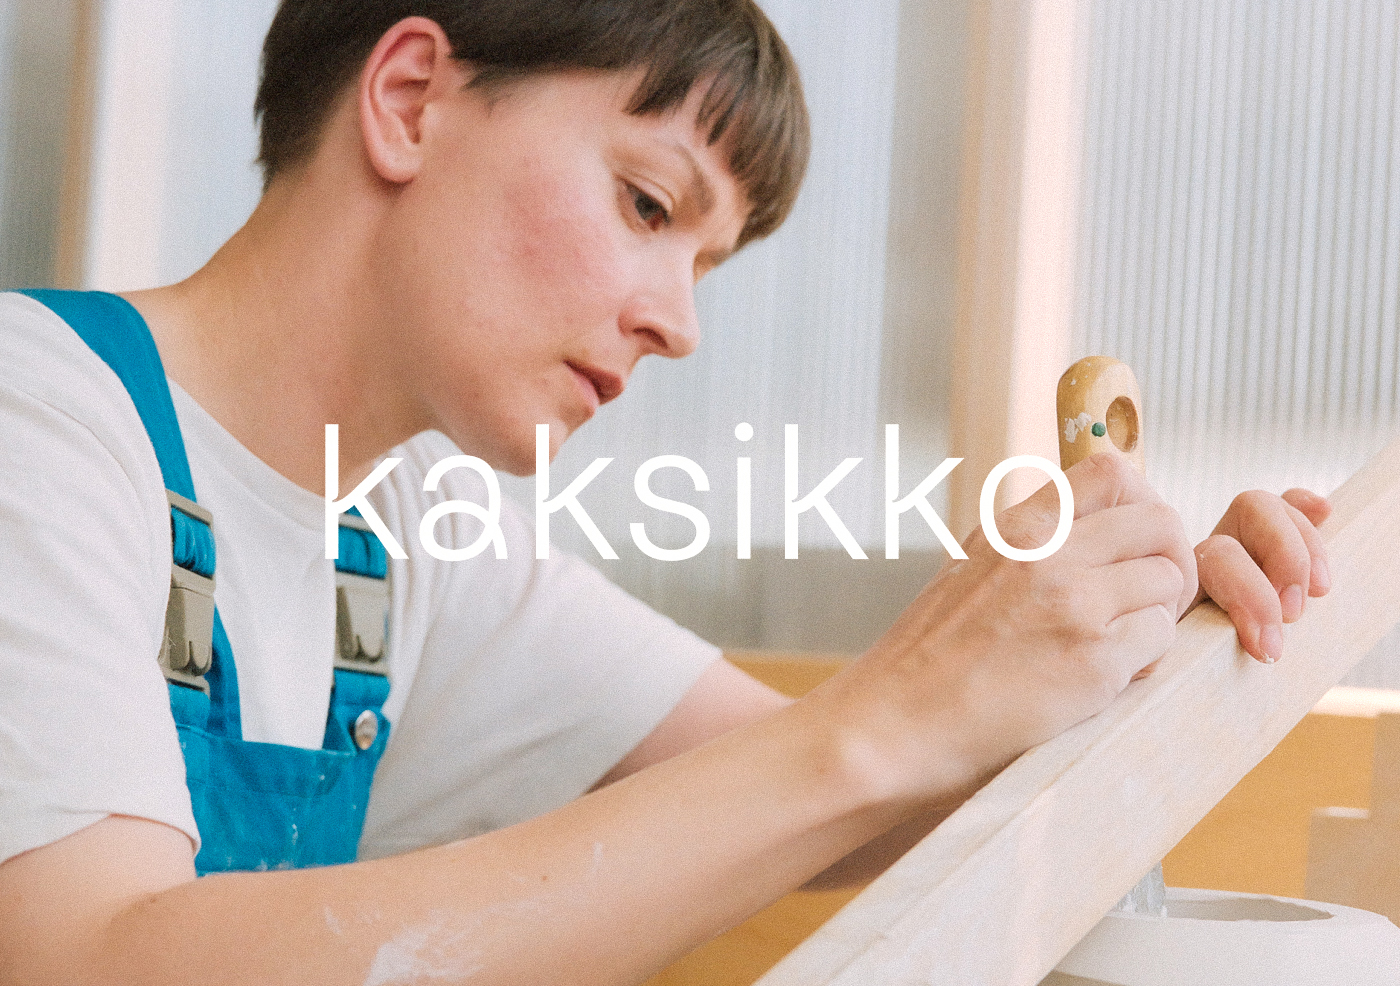 Artifact from the Crafting Kaksikko Studio's Branding: Clean, Inviting Visual Identity article on Abduzeedo